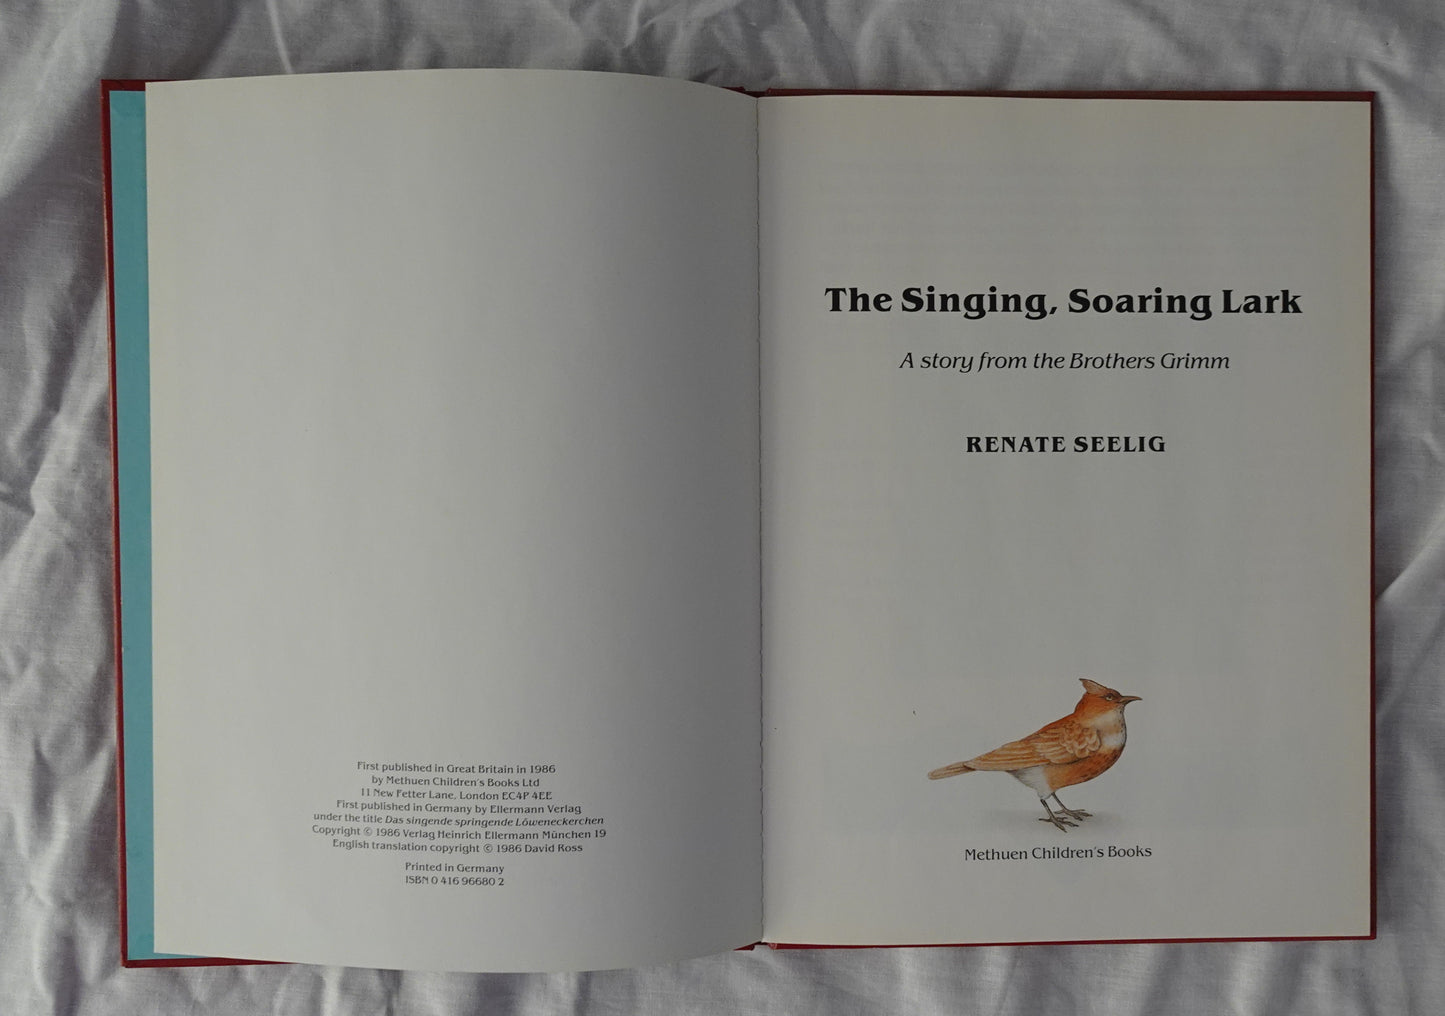 The Singing, Soaring Lark by Renate Seelig